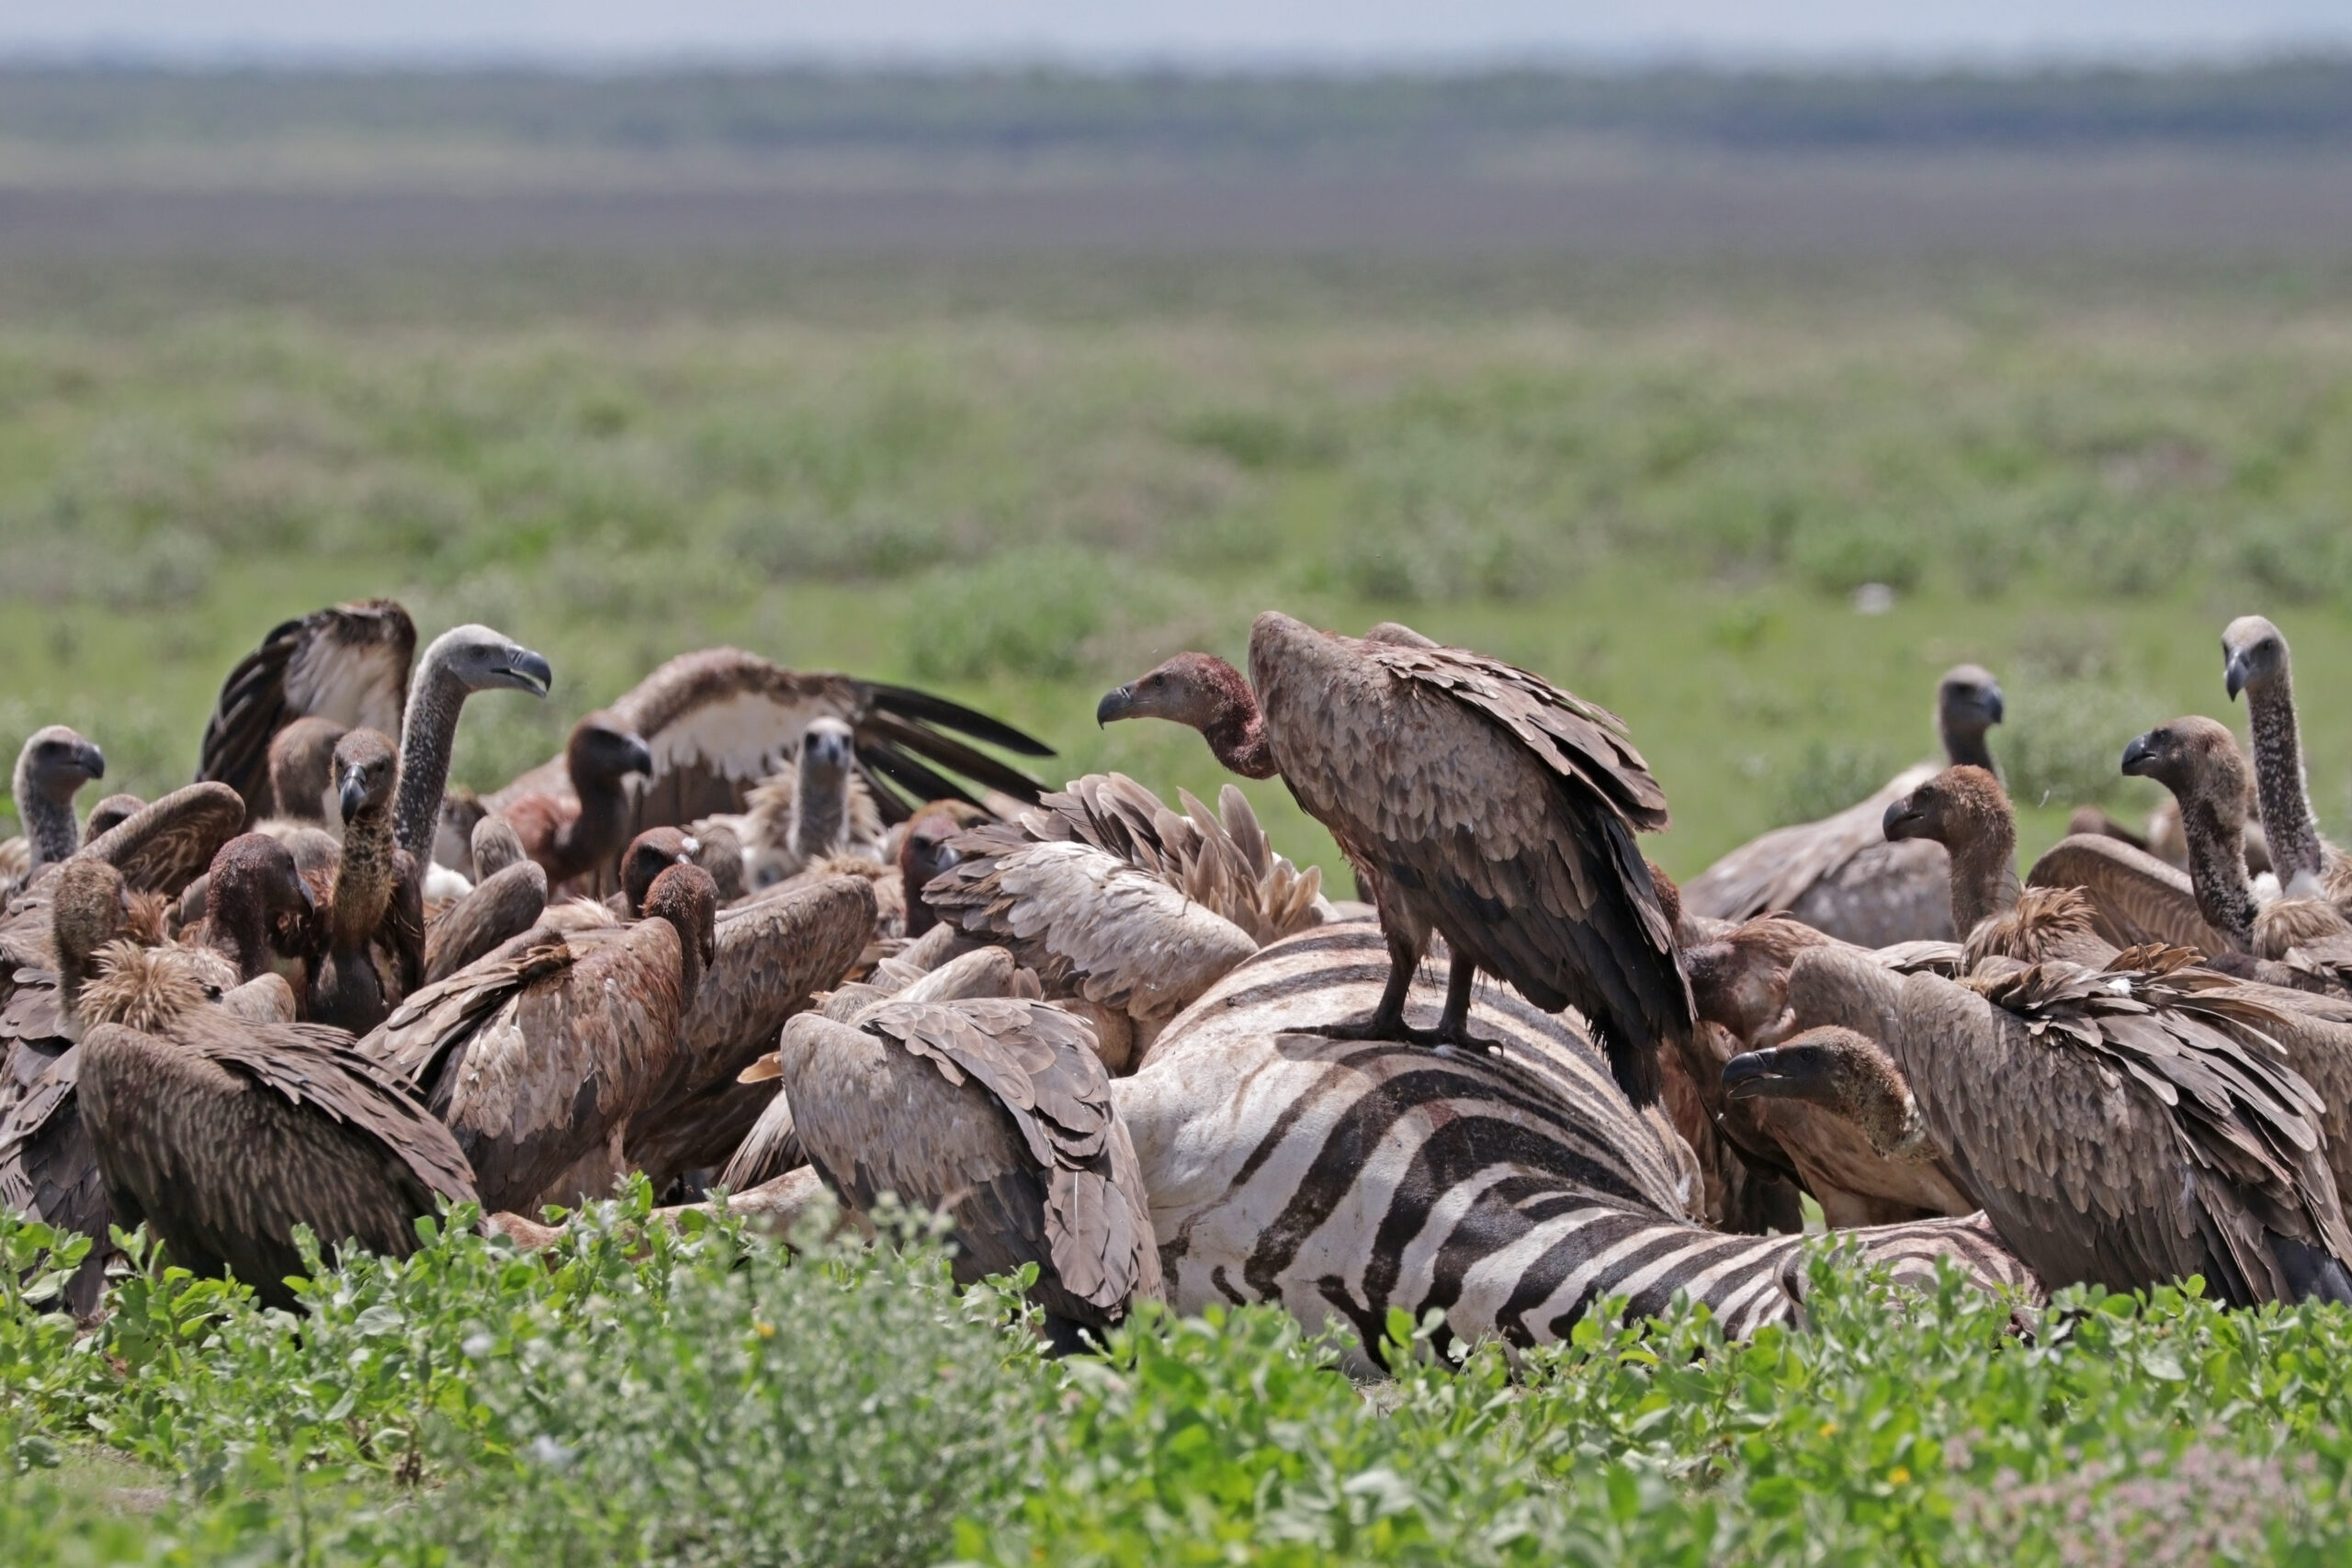 Vultures around a half-concealed zebra body